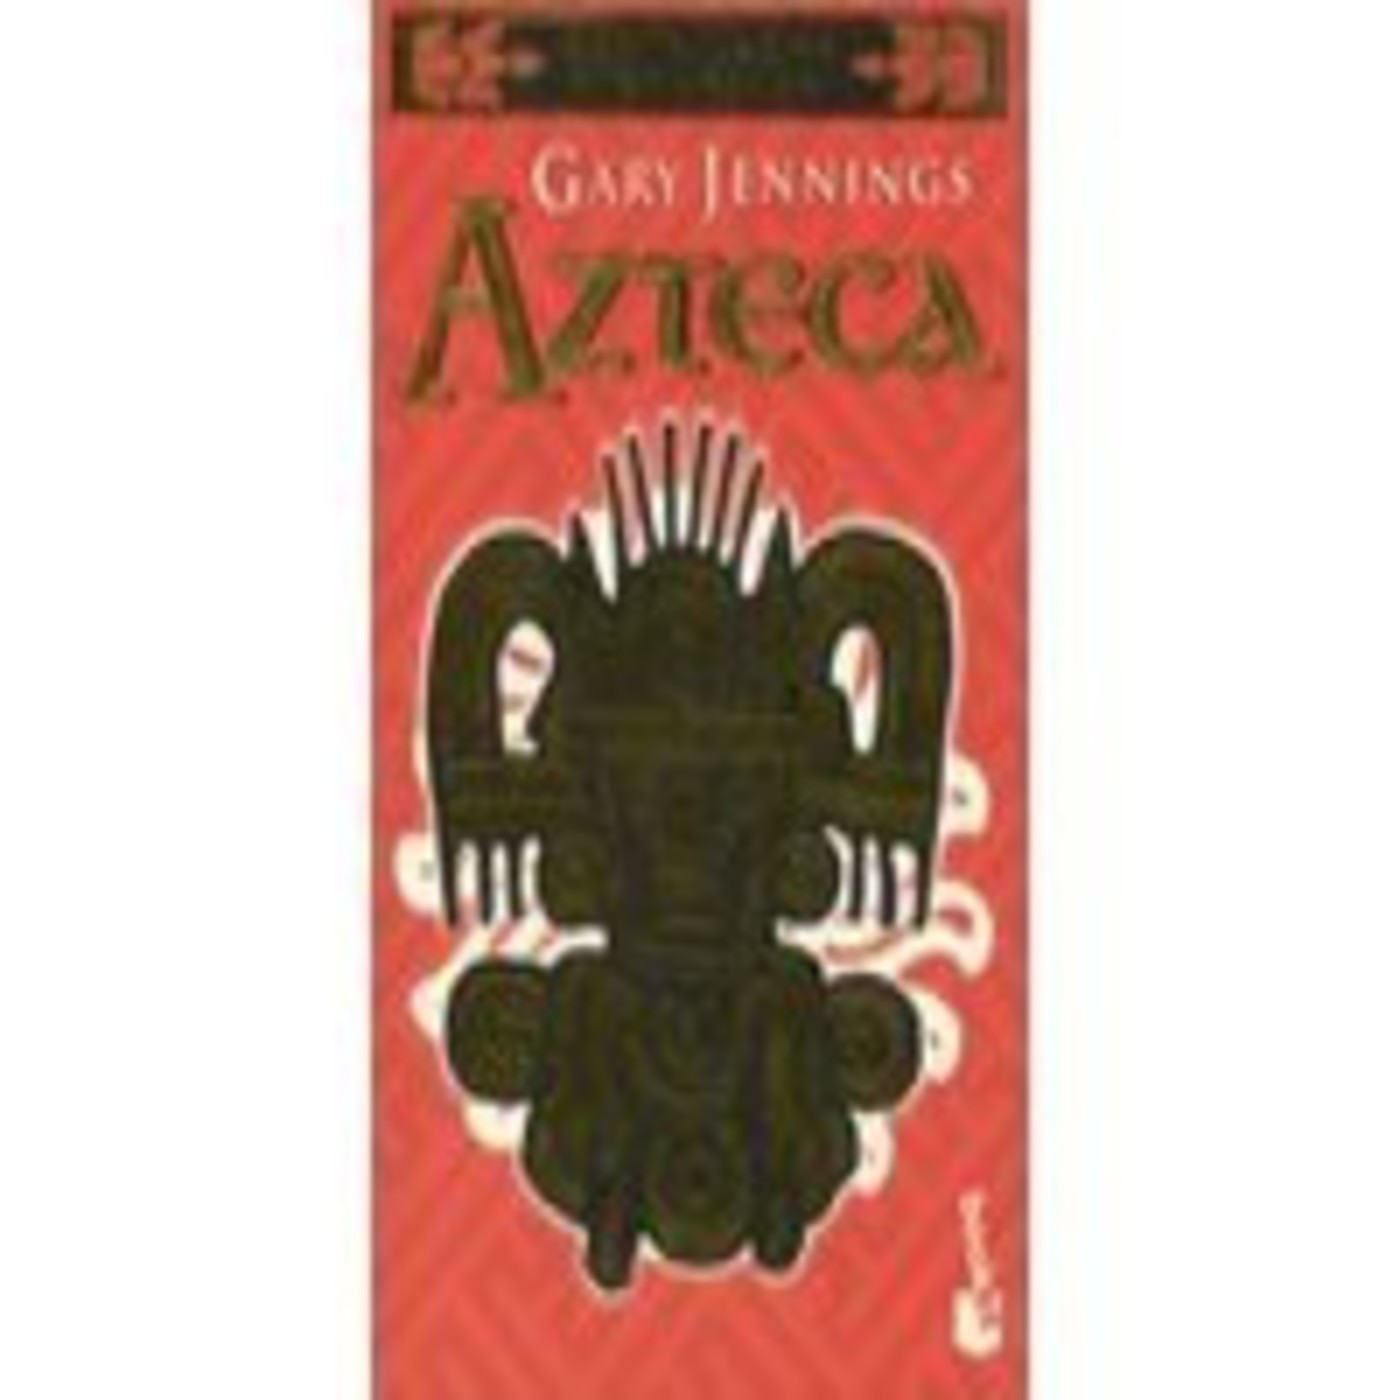 azteca jennings